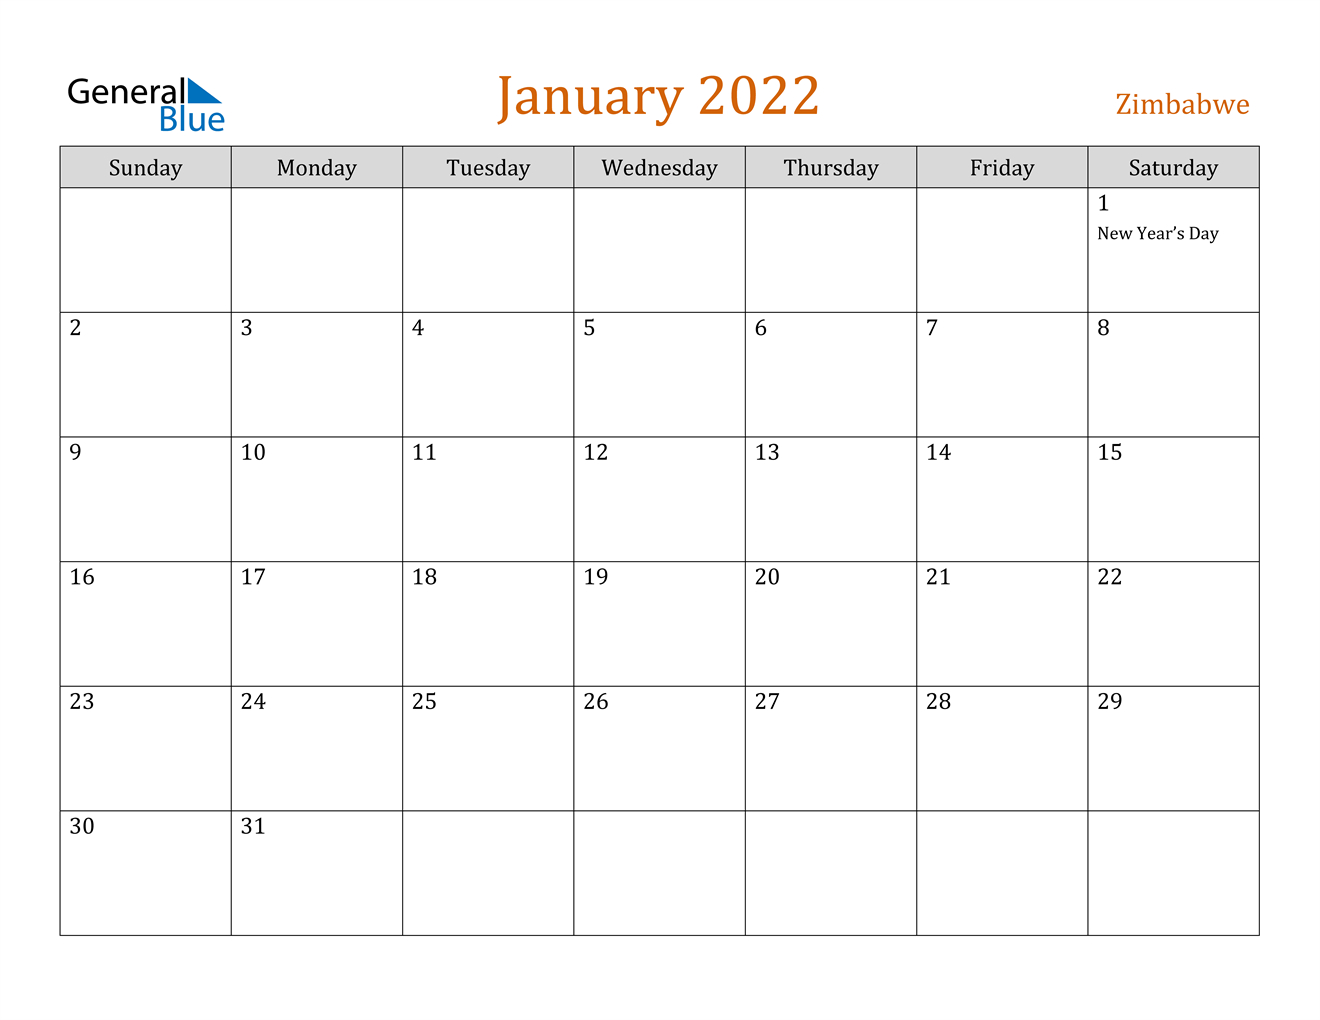 January 2022 Calendar - Zimbabwe